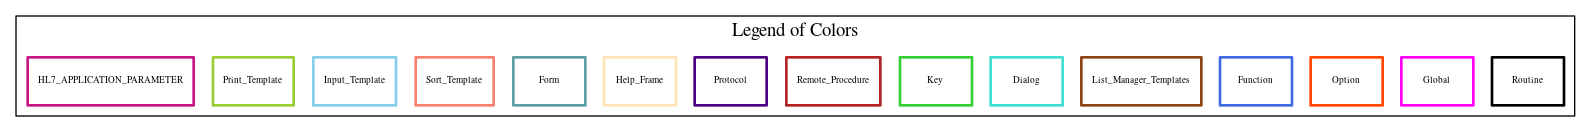 Legend of Colors